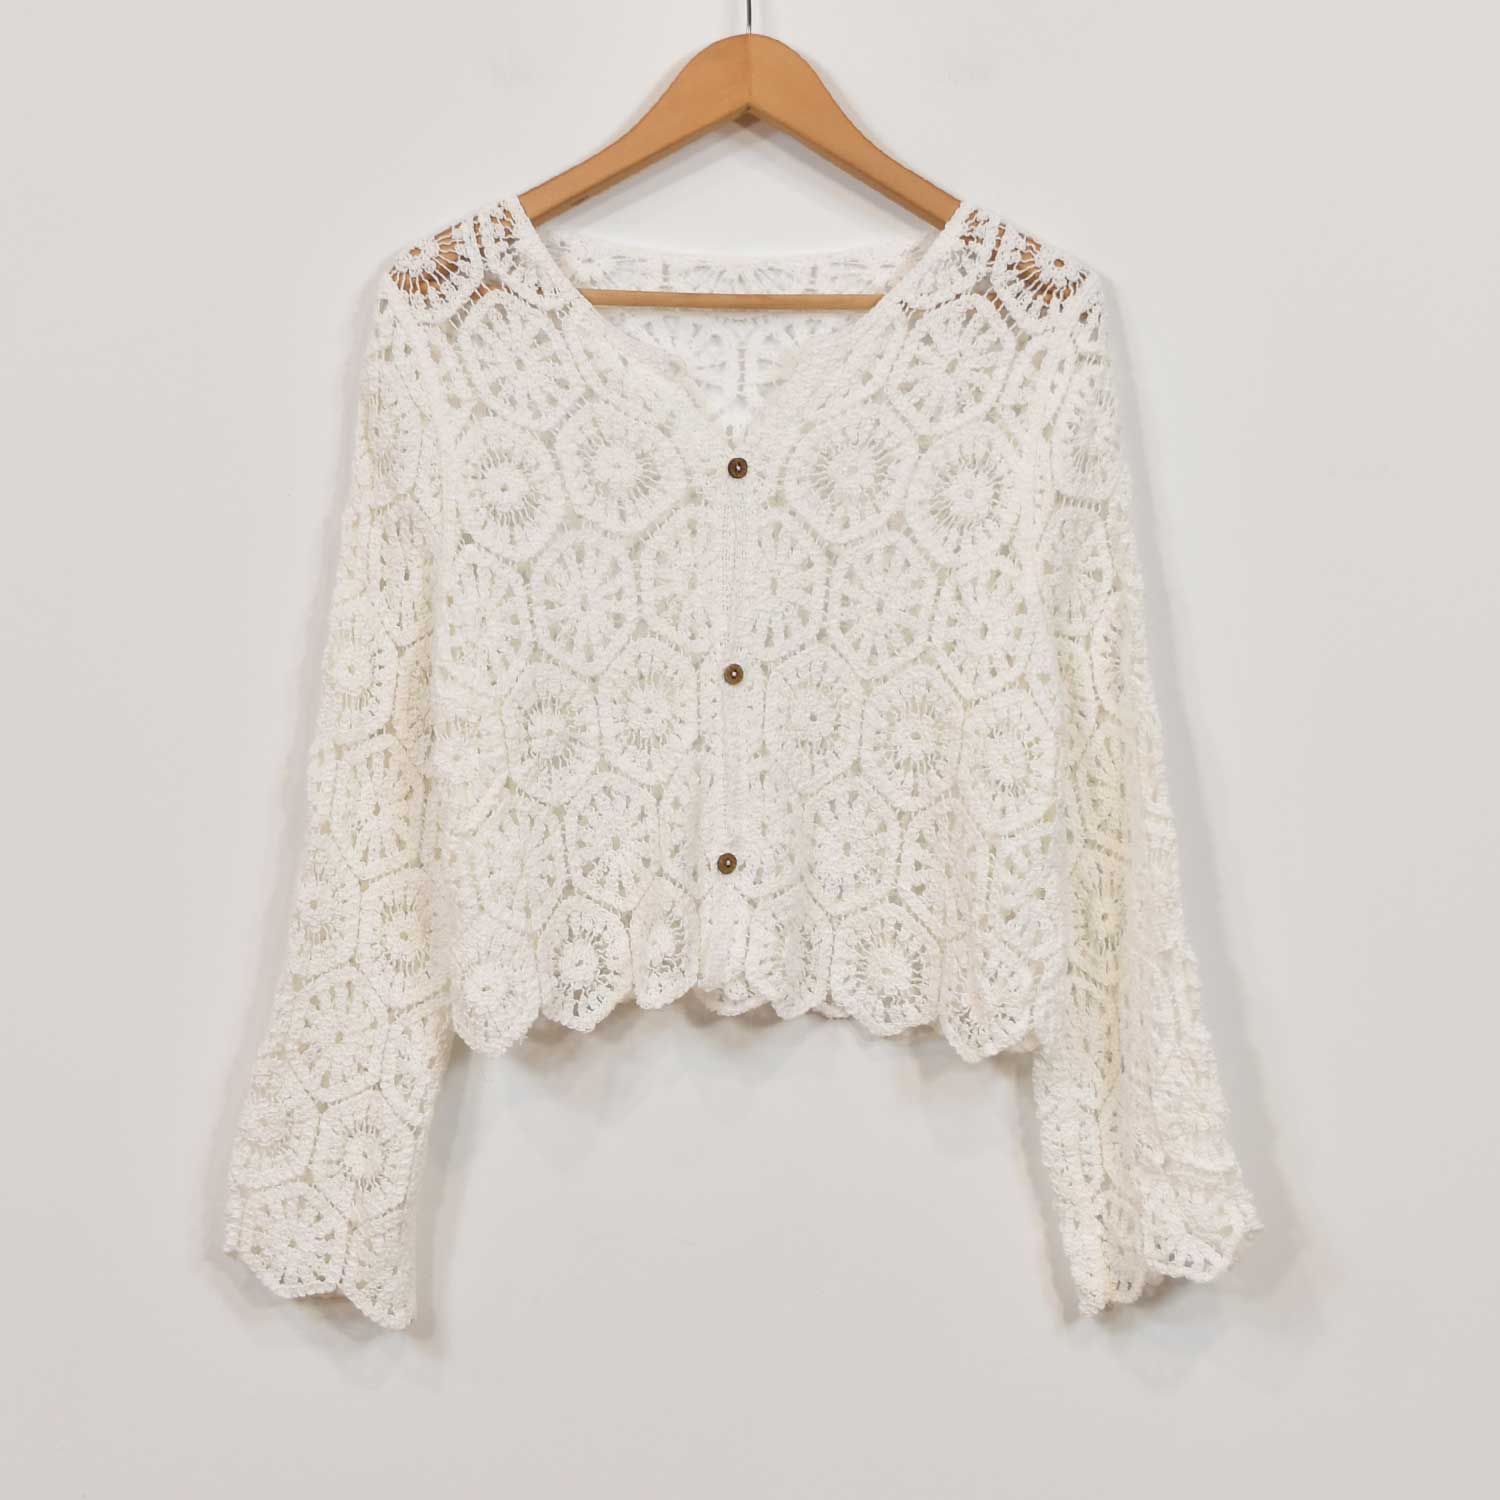 White buttons crochet jacket